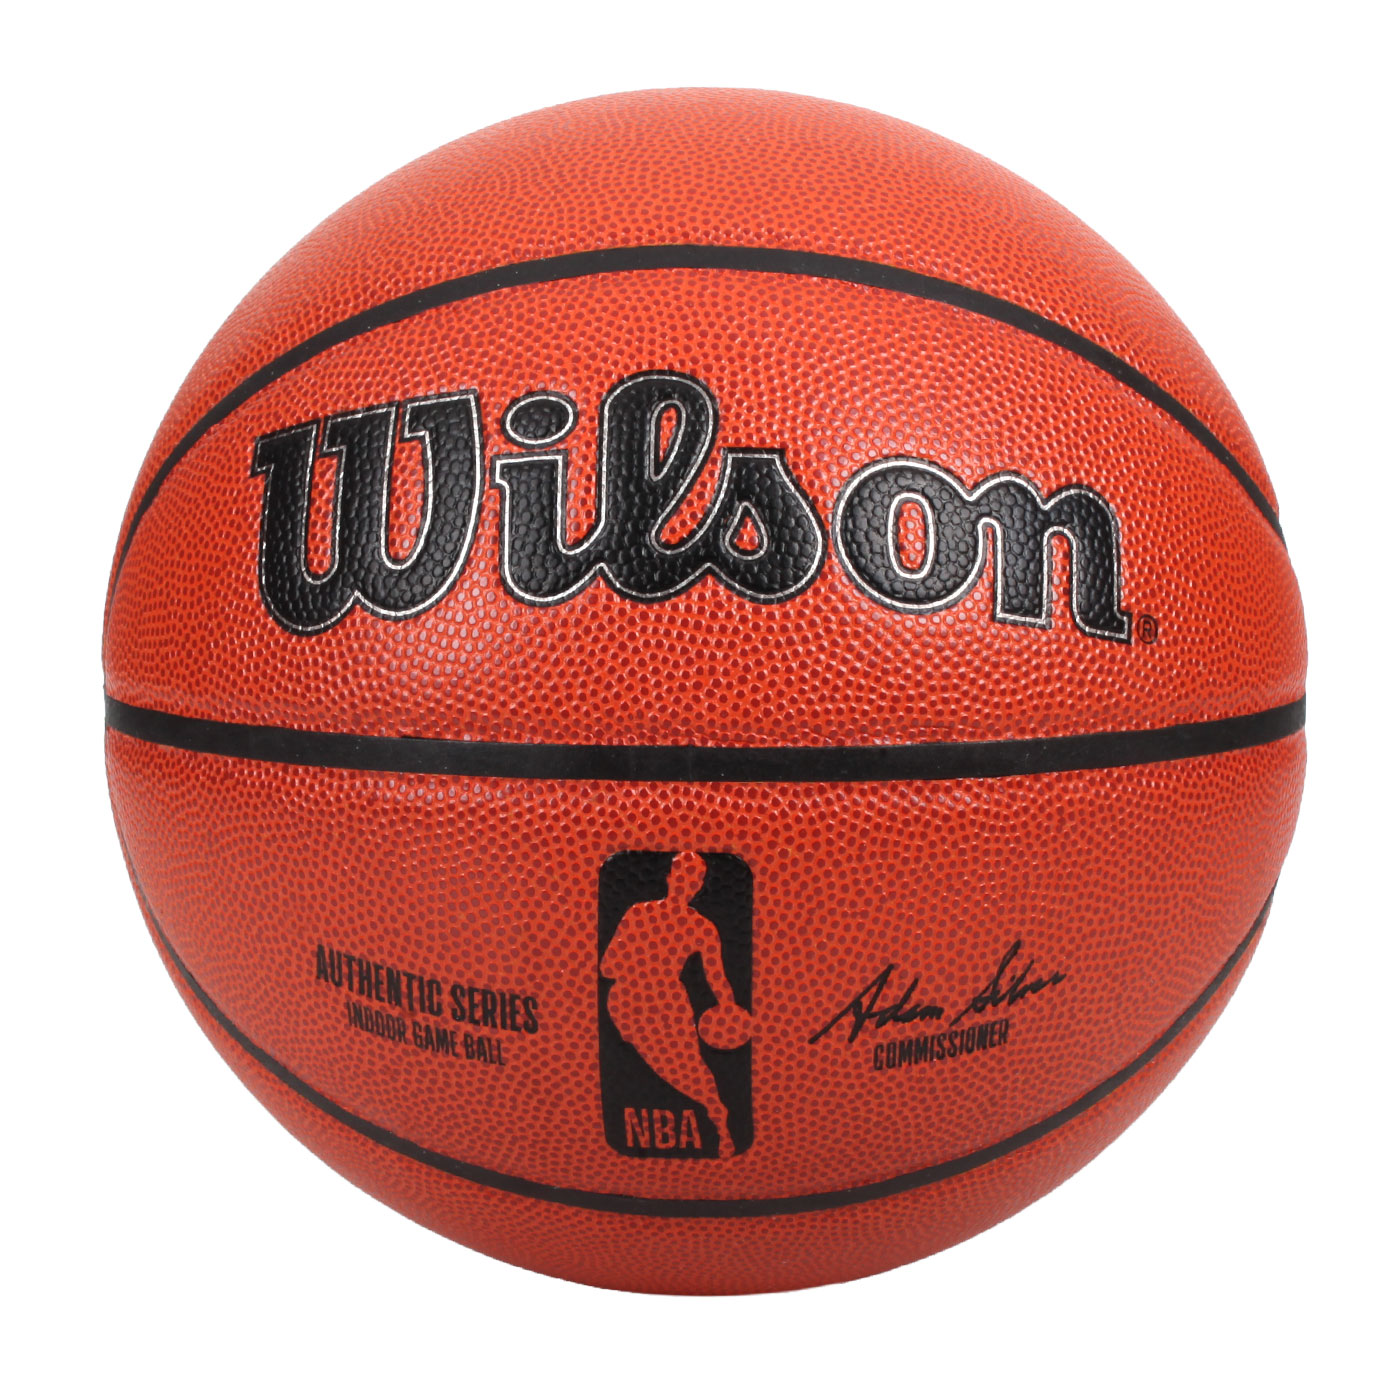 WILSON NBA AUTH系列室內合成皮籃球#7 WTB7100XB07 - 橘黑